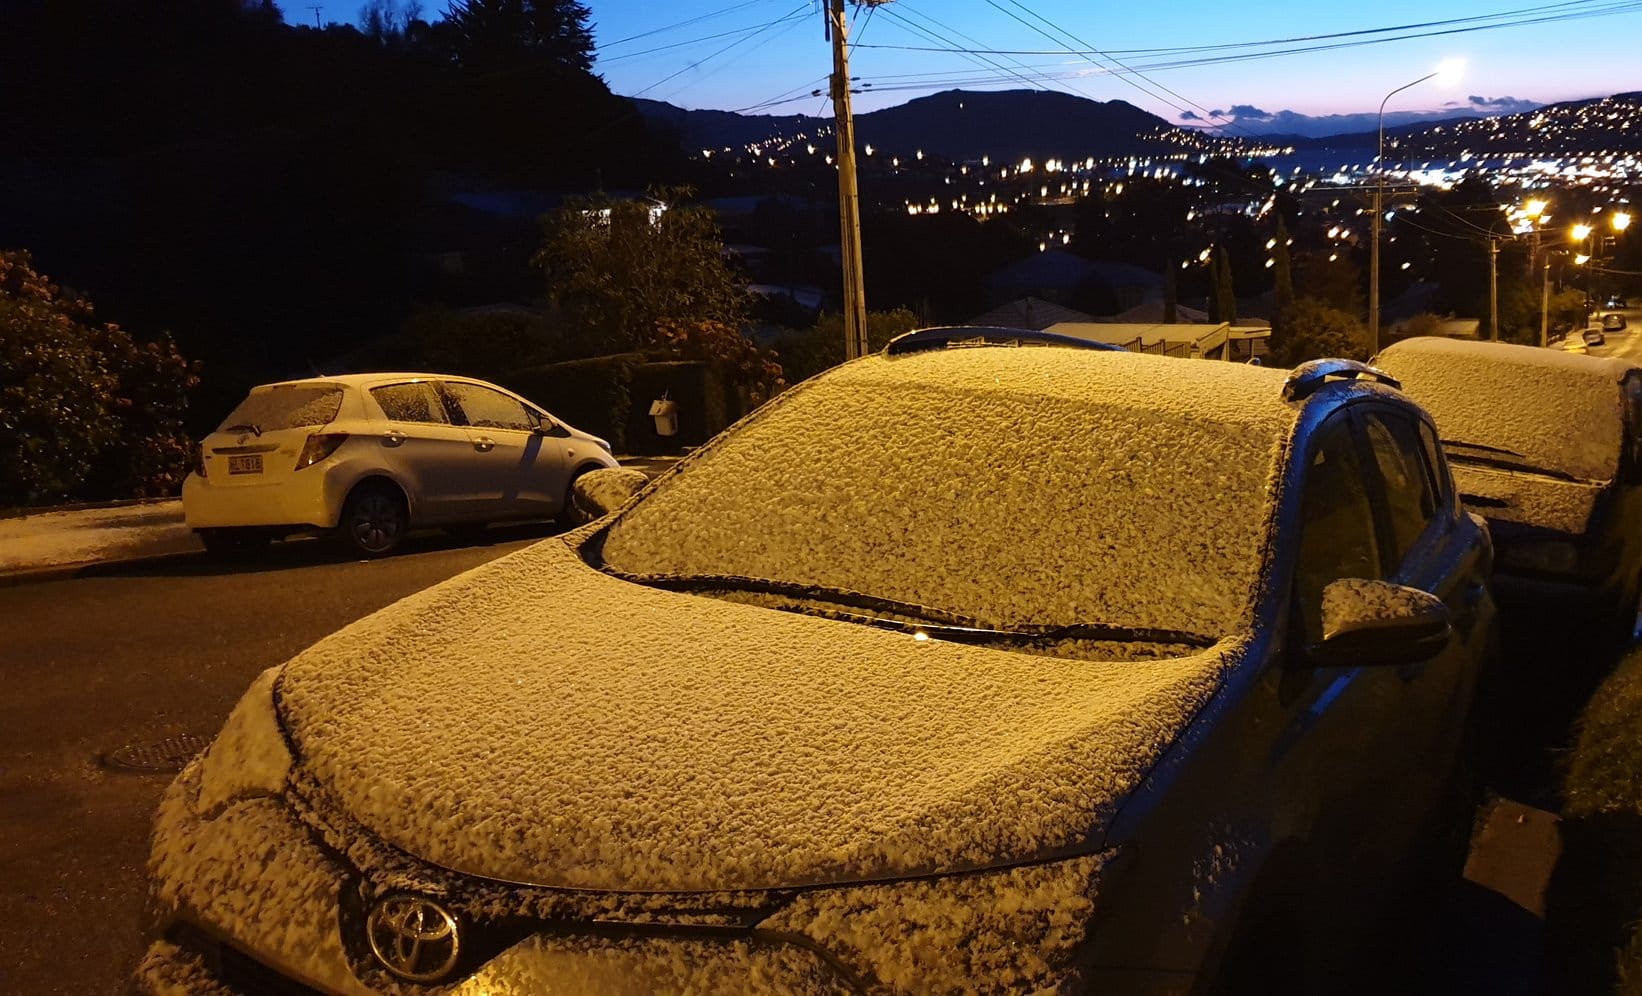 Snow in Dunedin this morning.